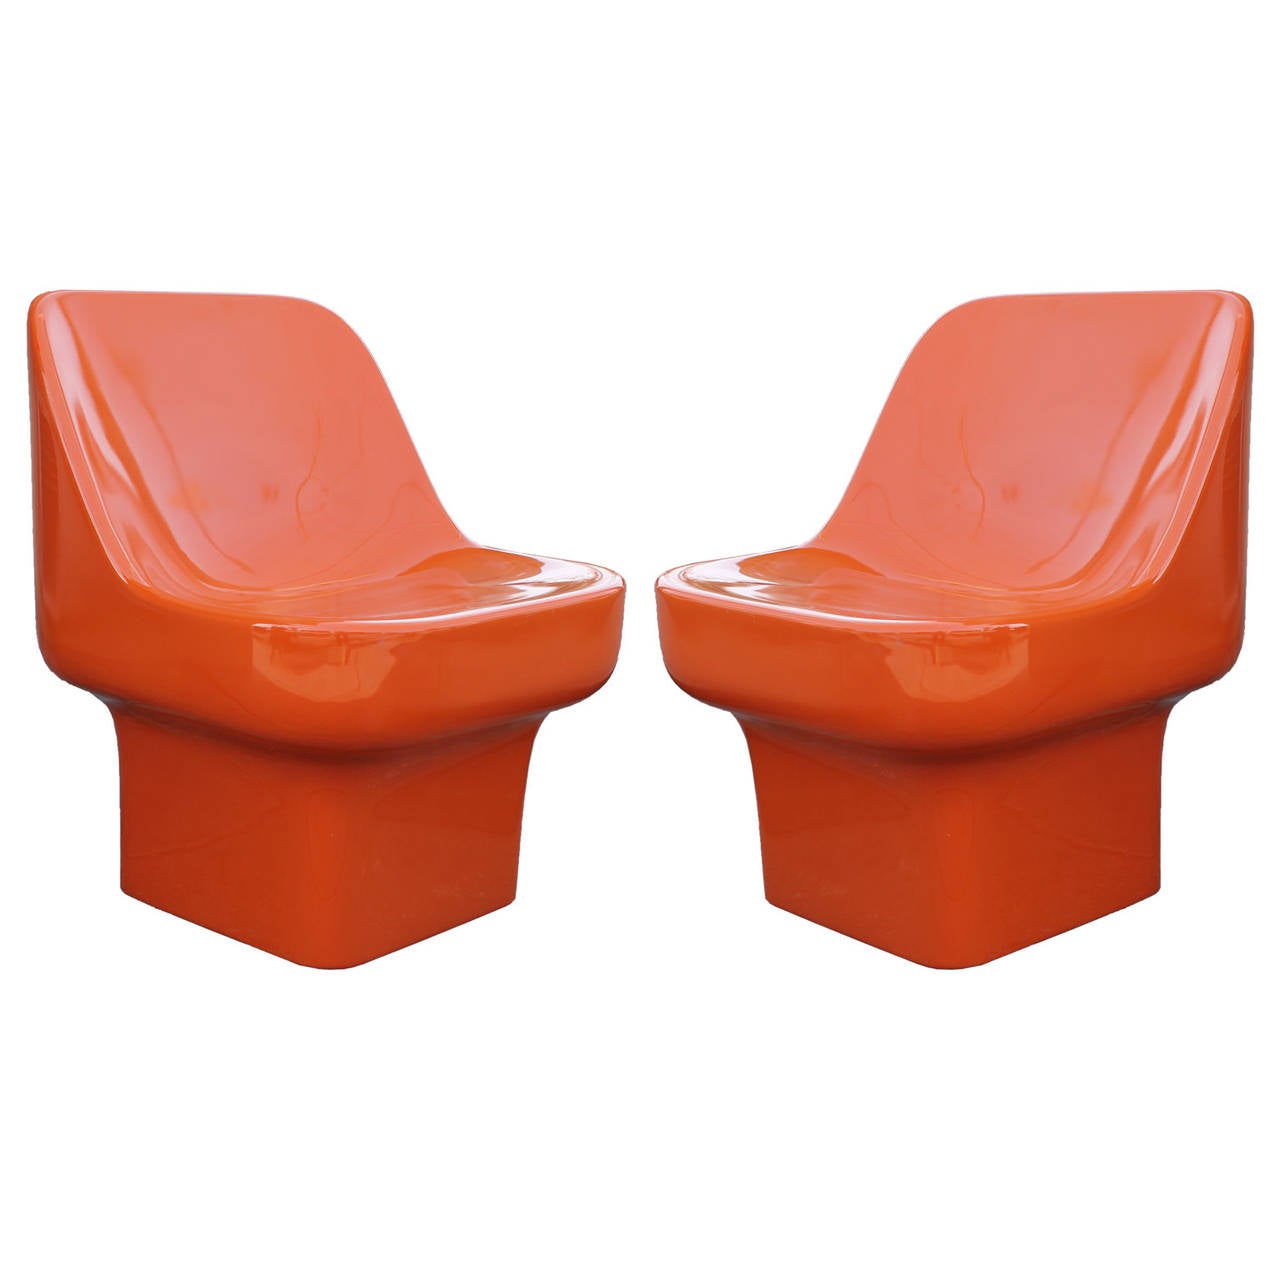 Douglas Deeds Glossy Orange Lacquered Fiberglass Chairs at 1stDibs